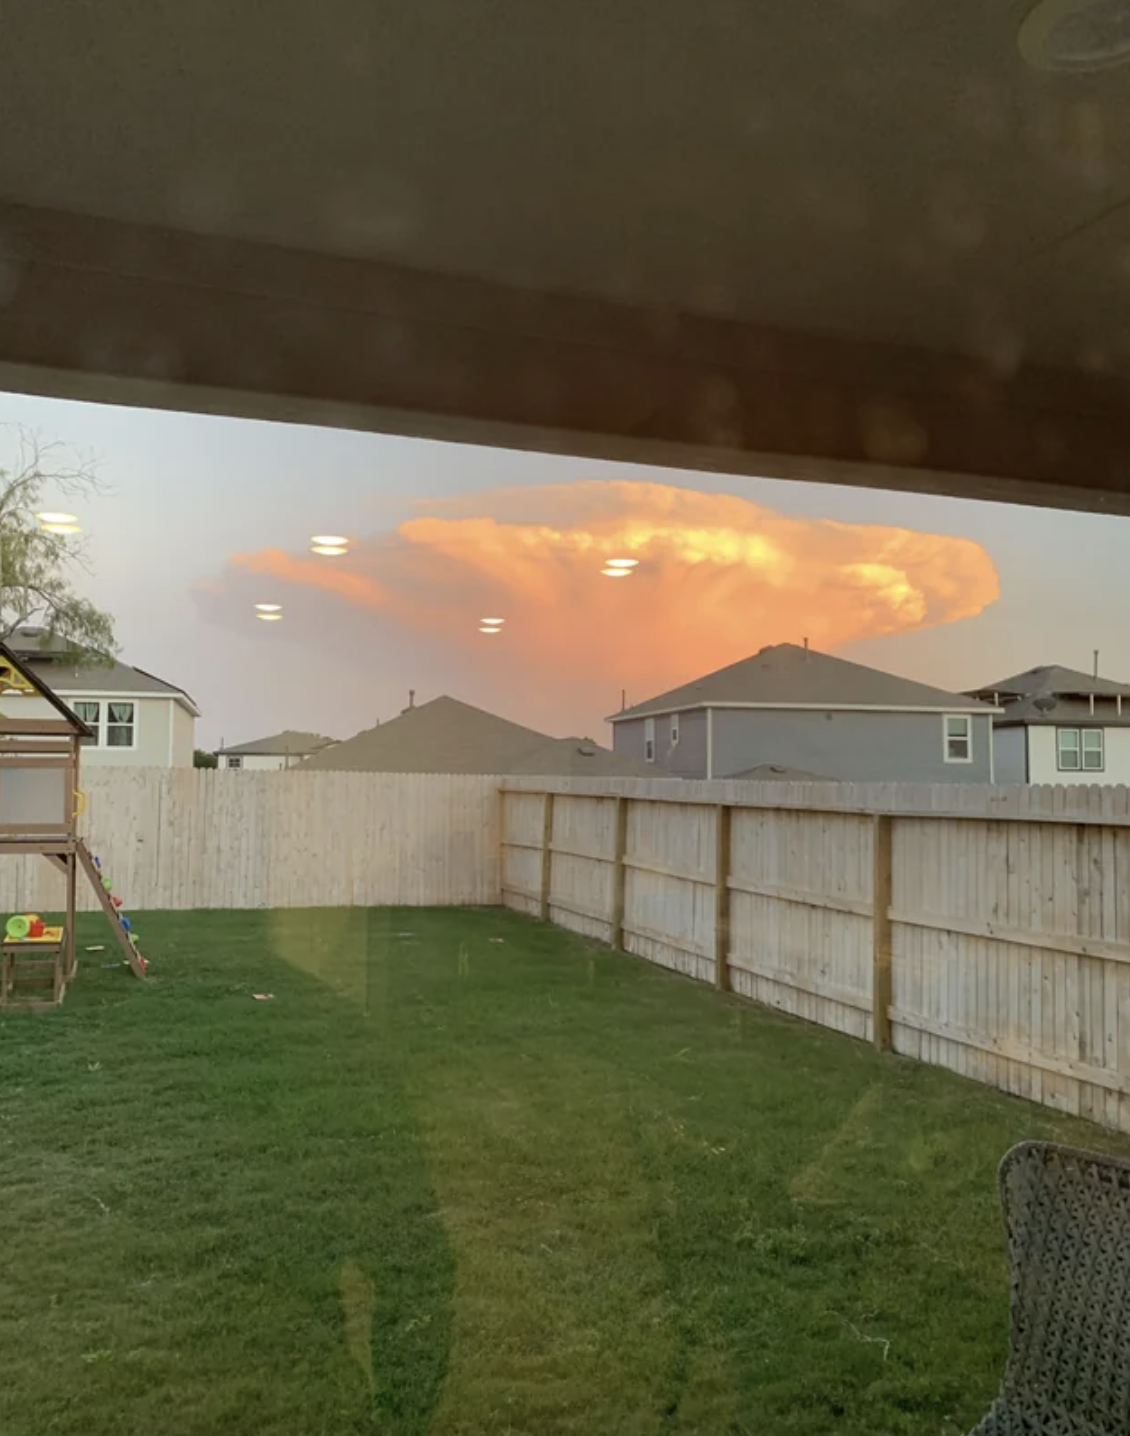 very large mushroom shaped cloud